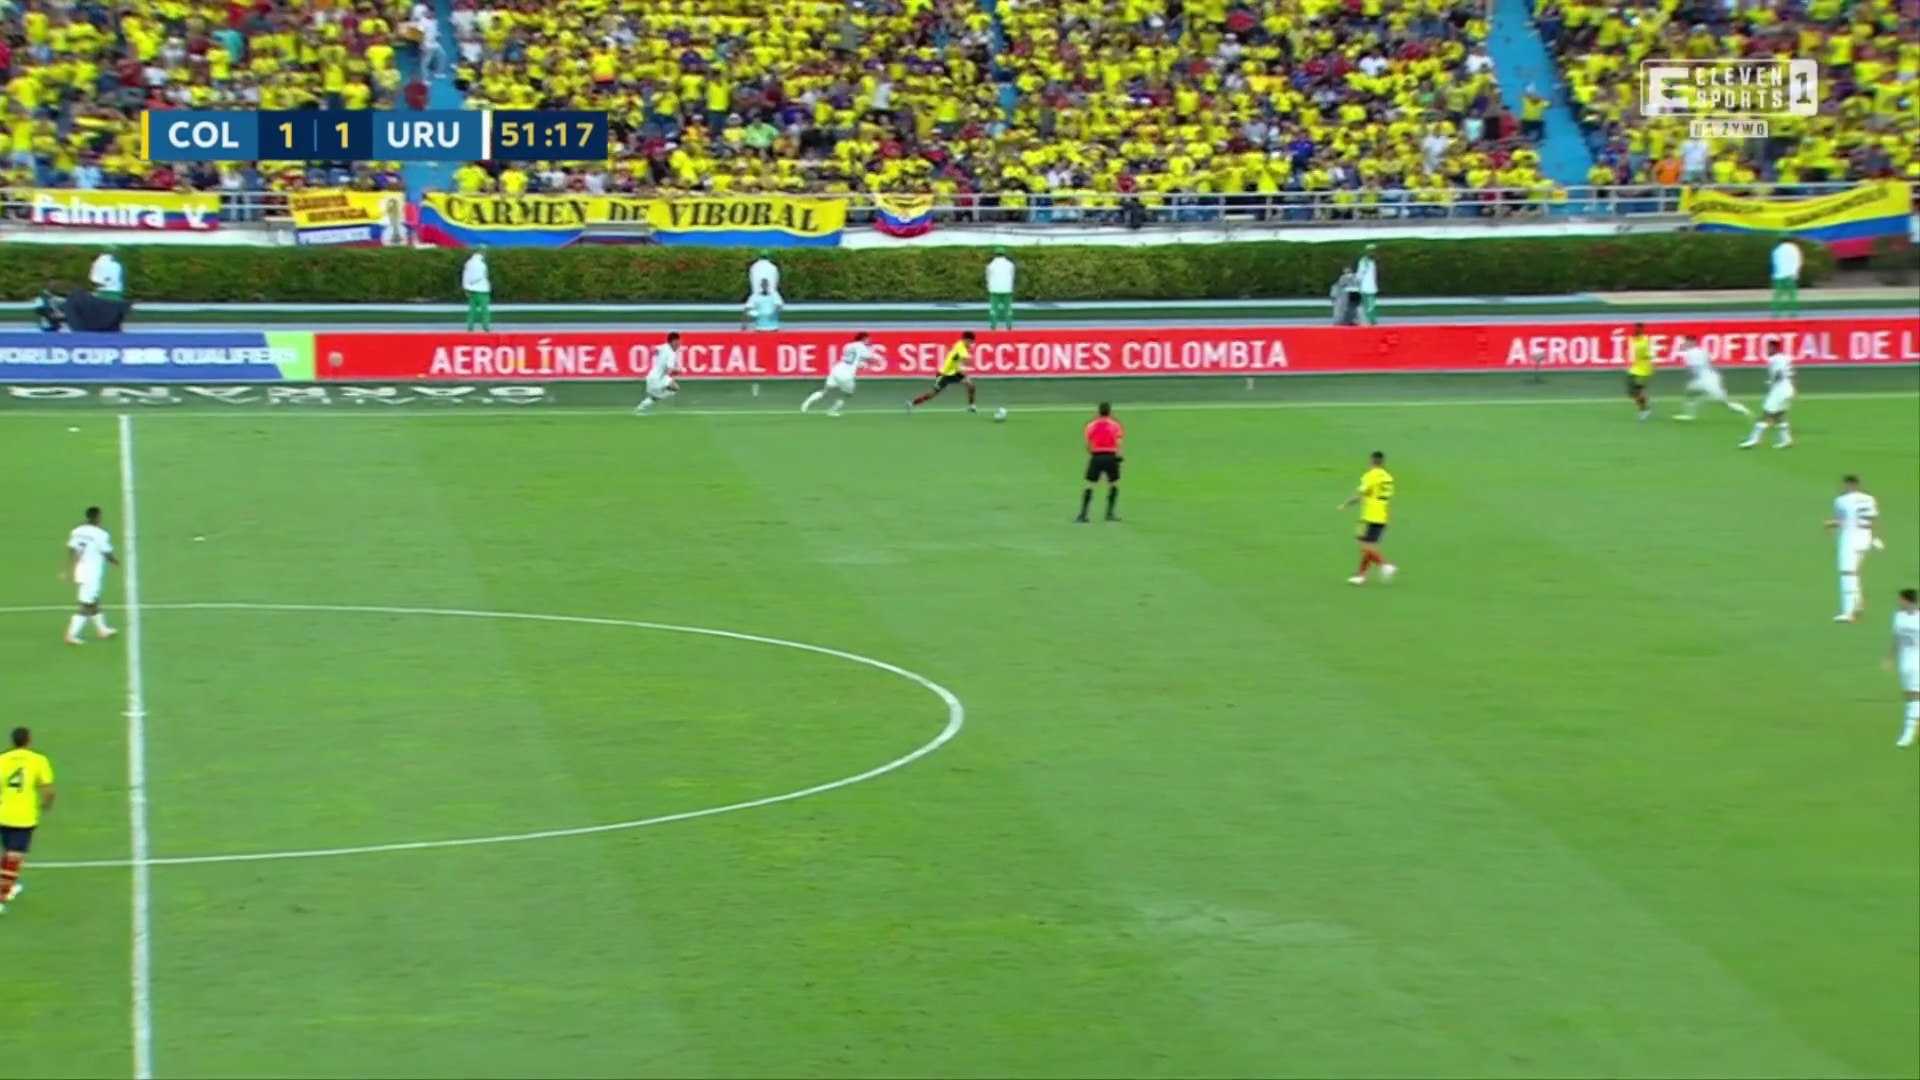 Colombia [2] - 1 Uruguay - Mateus Uribe 53'